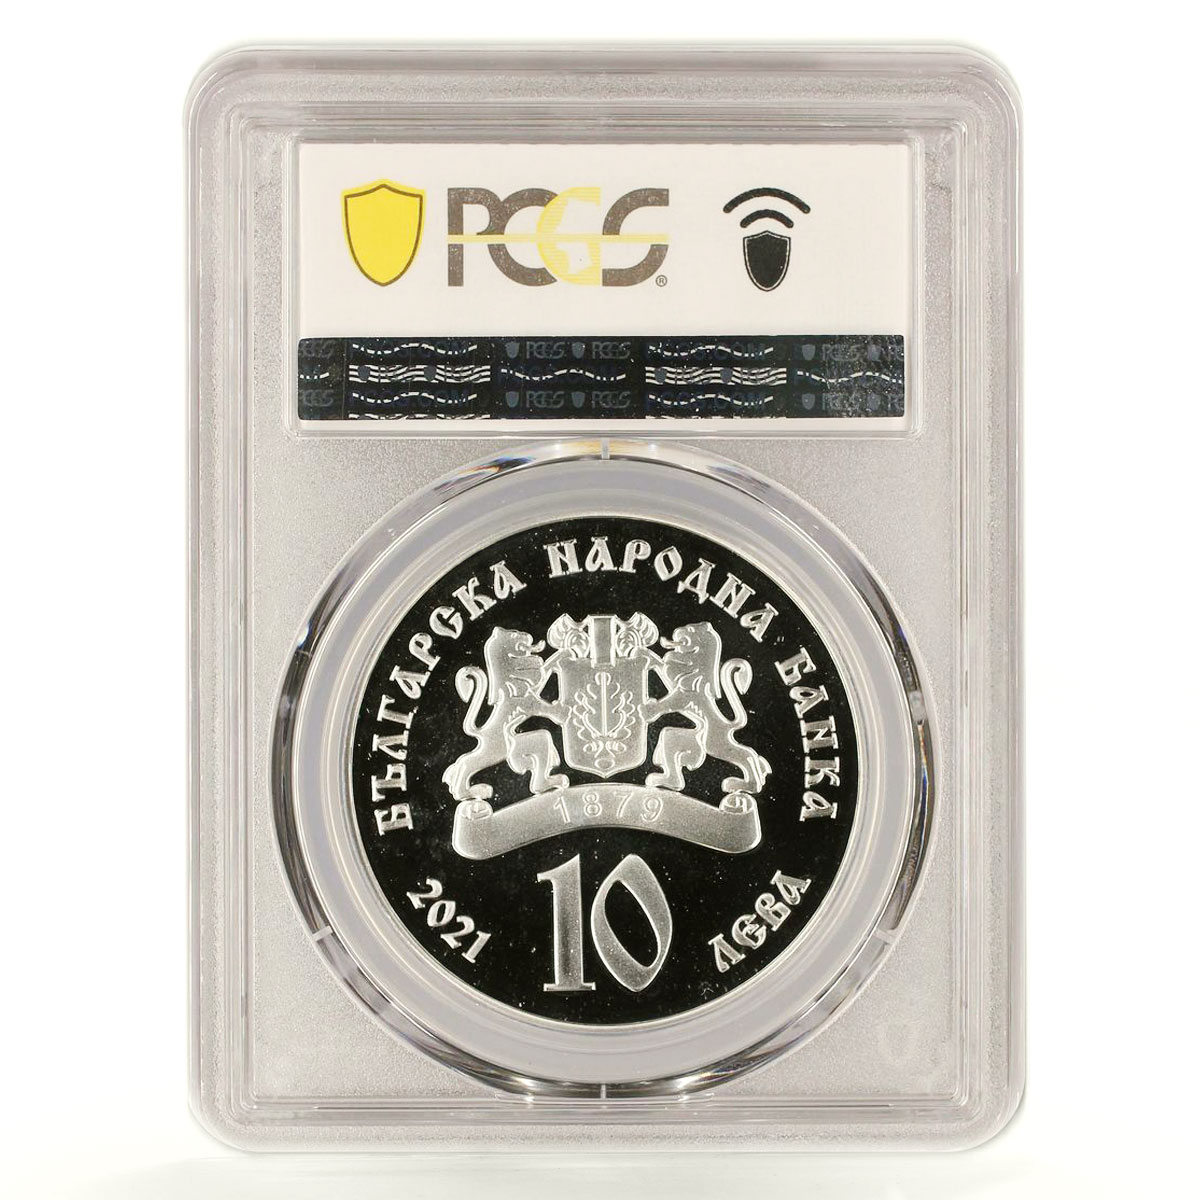 Bulgaria 10 leva Customs Traditions Nestinarstvo PR69 PCGS silver coin 2021